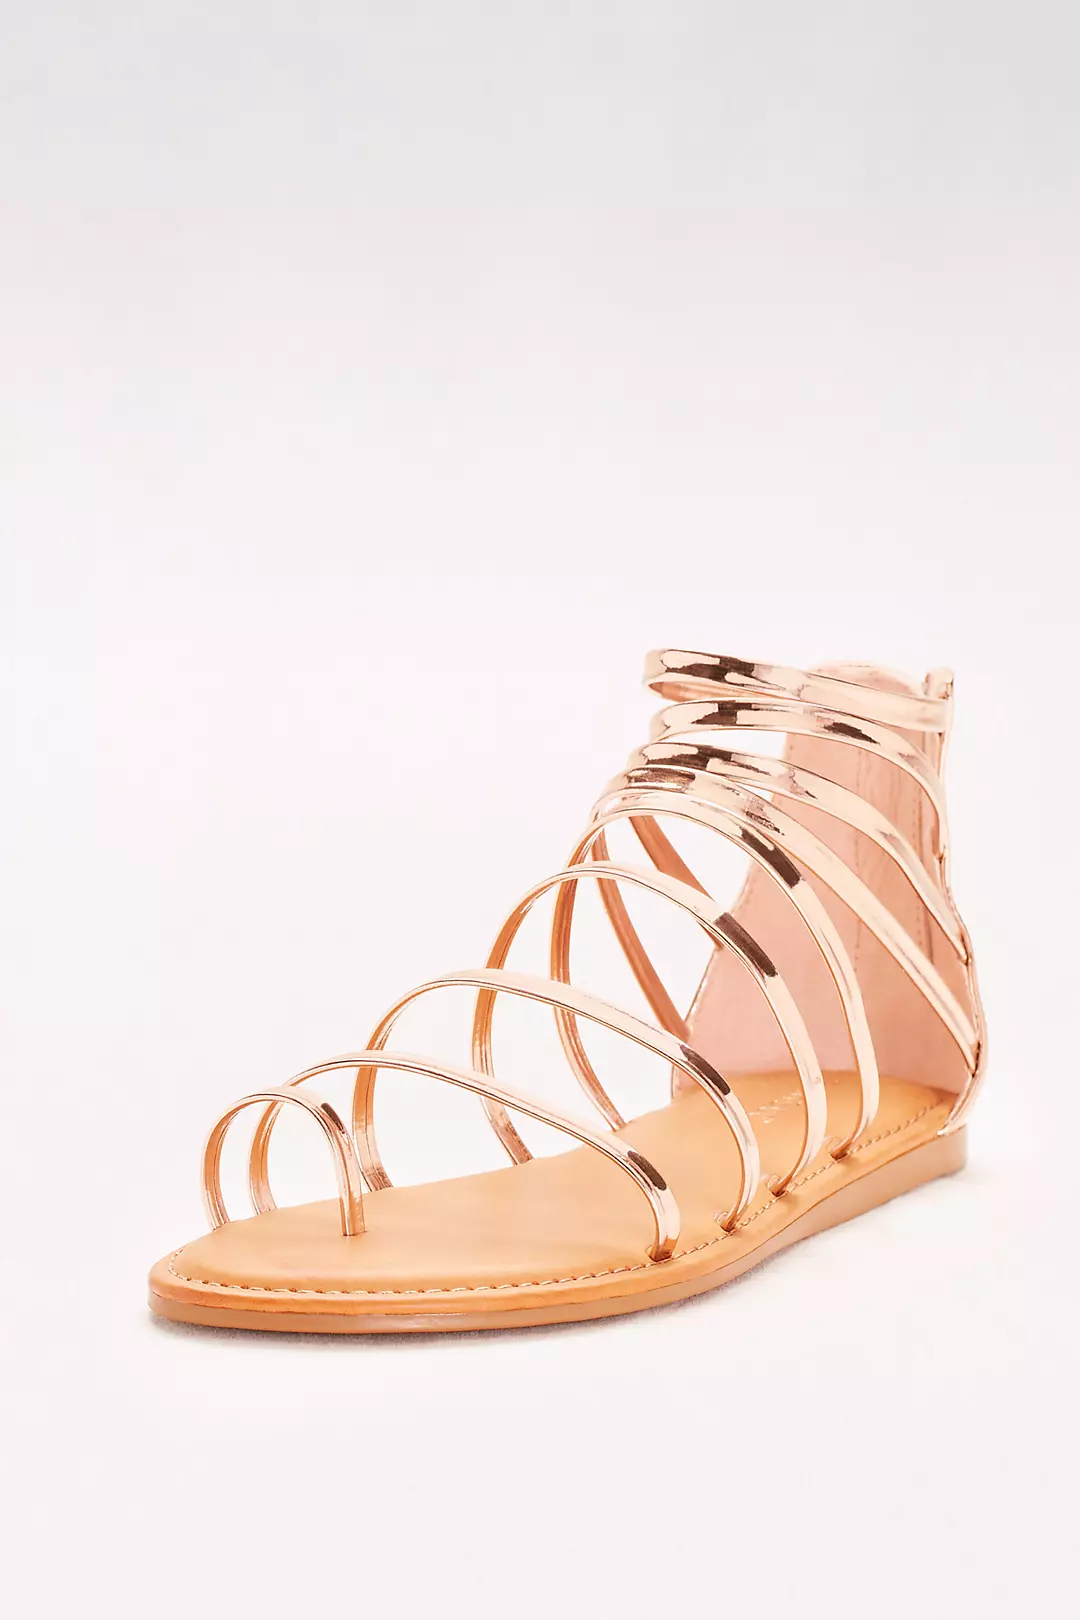 Simple Strappy Toe-Loop Gladiator Sandals Image